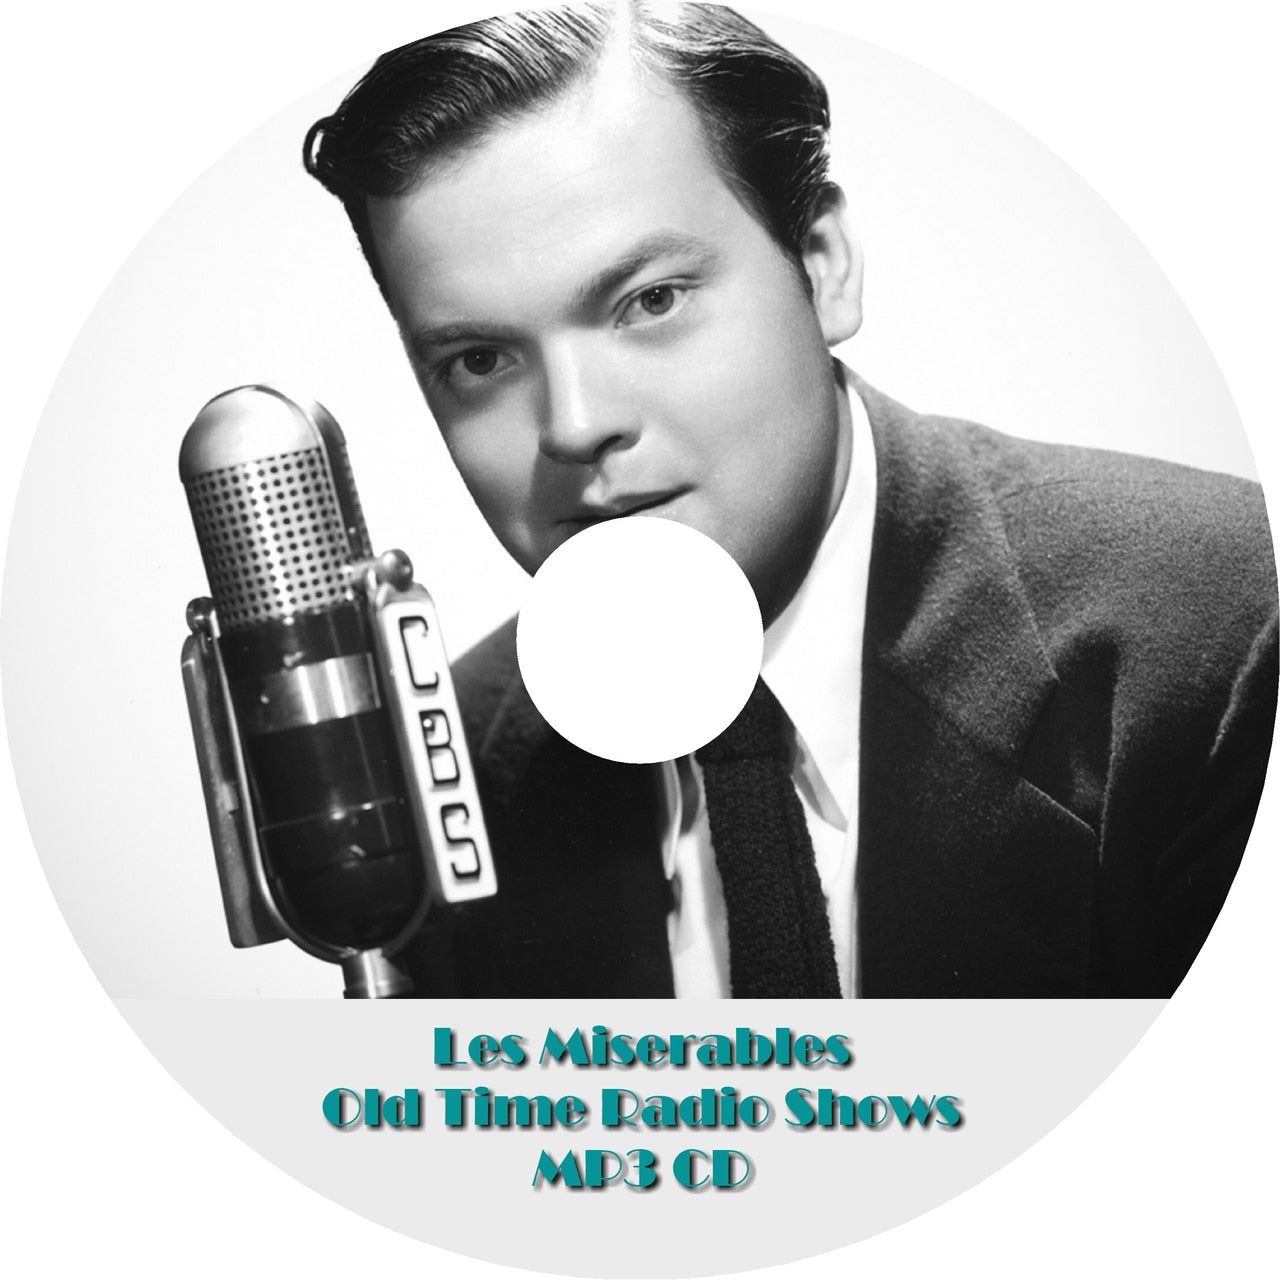 Les Miserables Old Time Radio Shows OTR MP3 On CD 7 Episodes